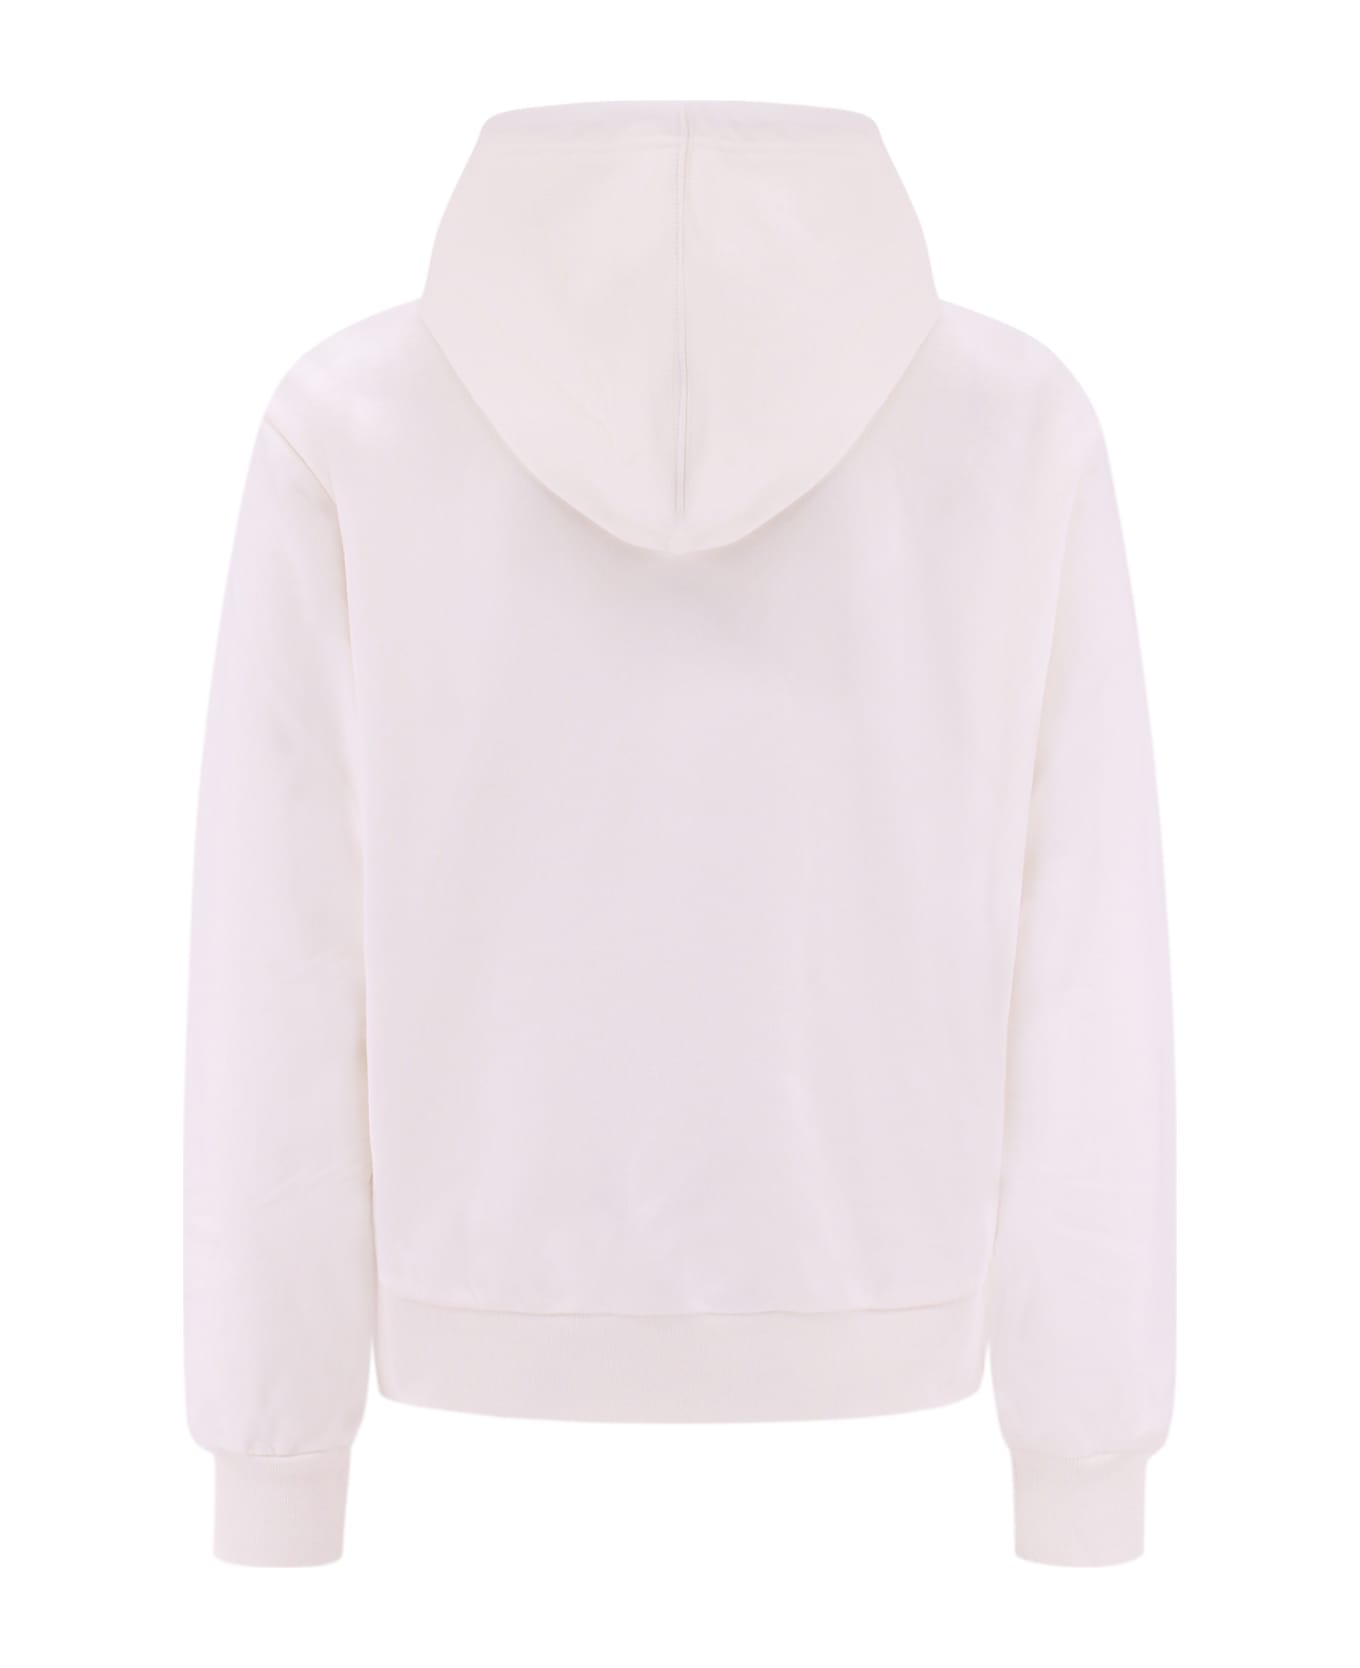 Marni Sweatshirt - White